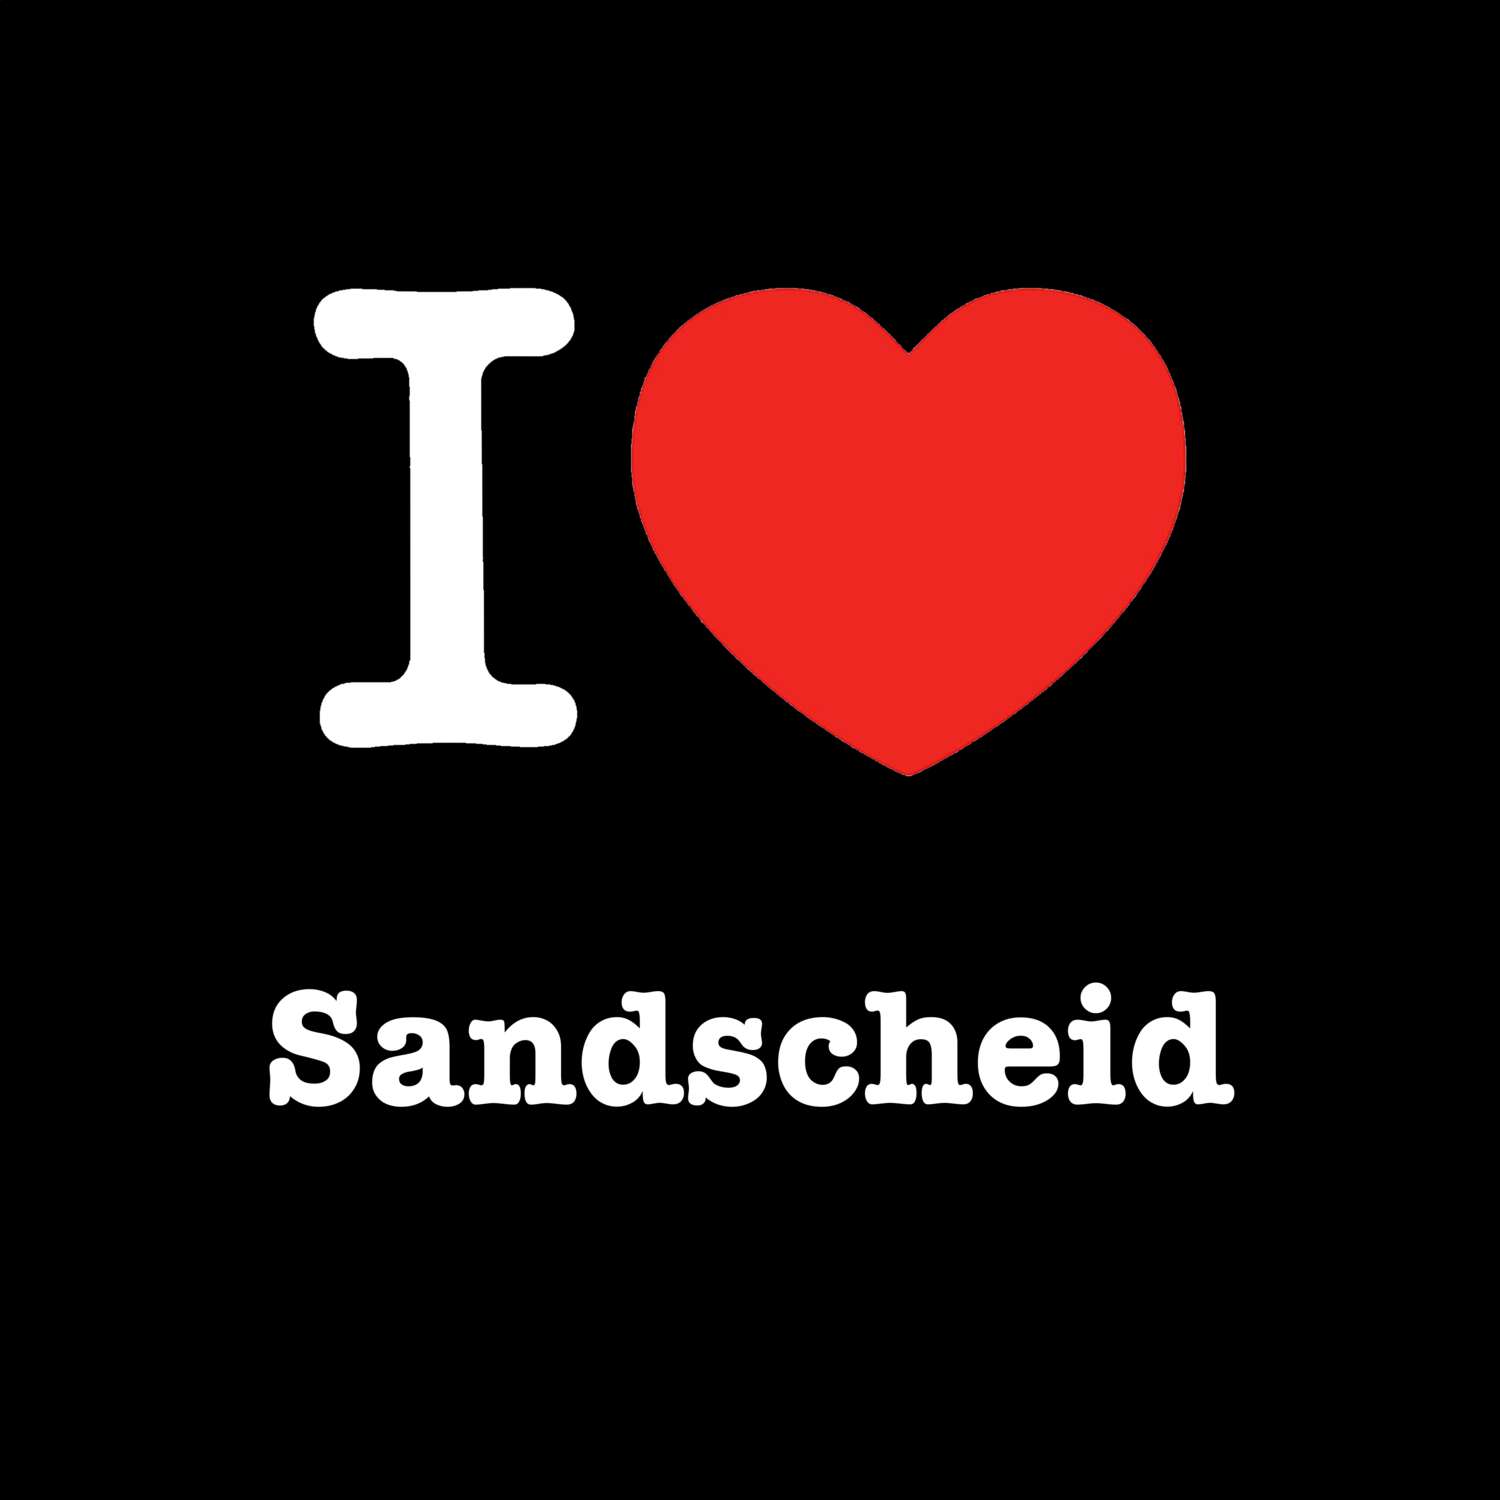 Sandscheid T-Shirt »I love«